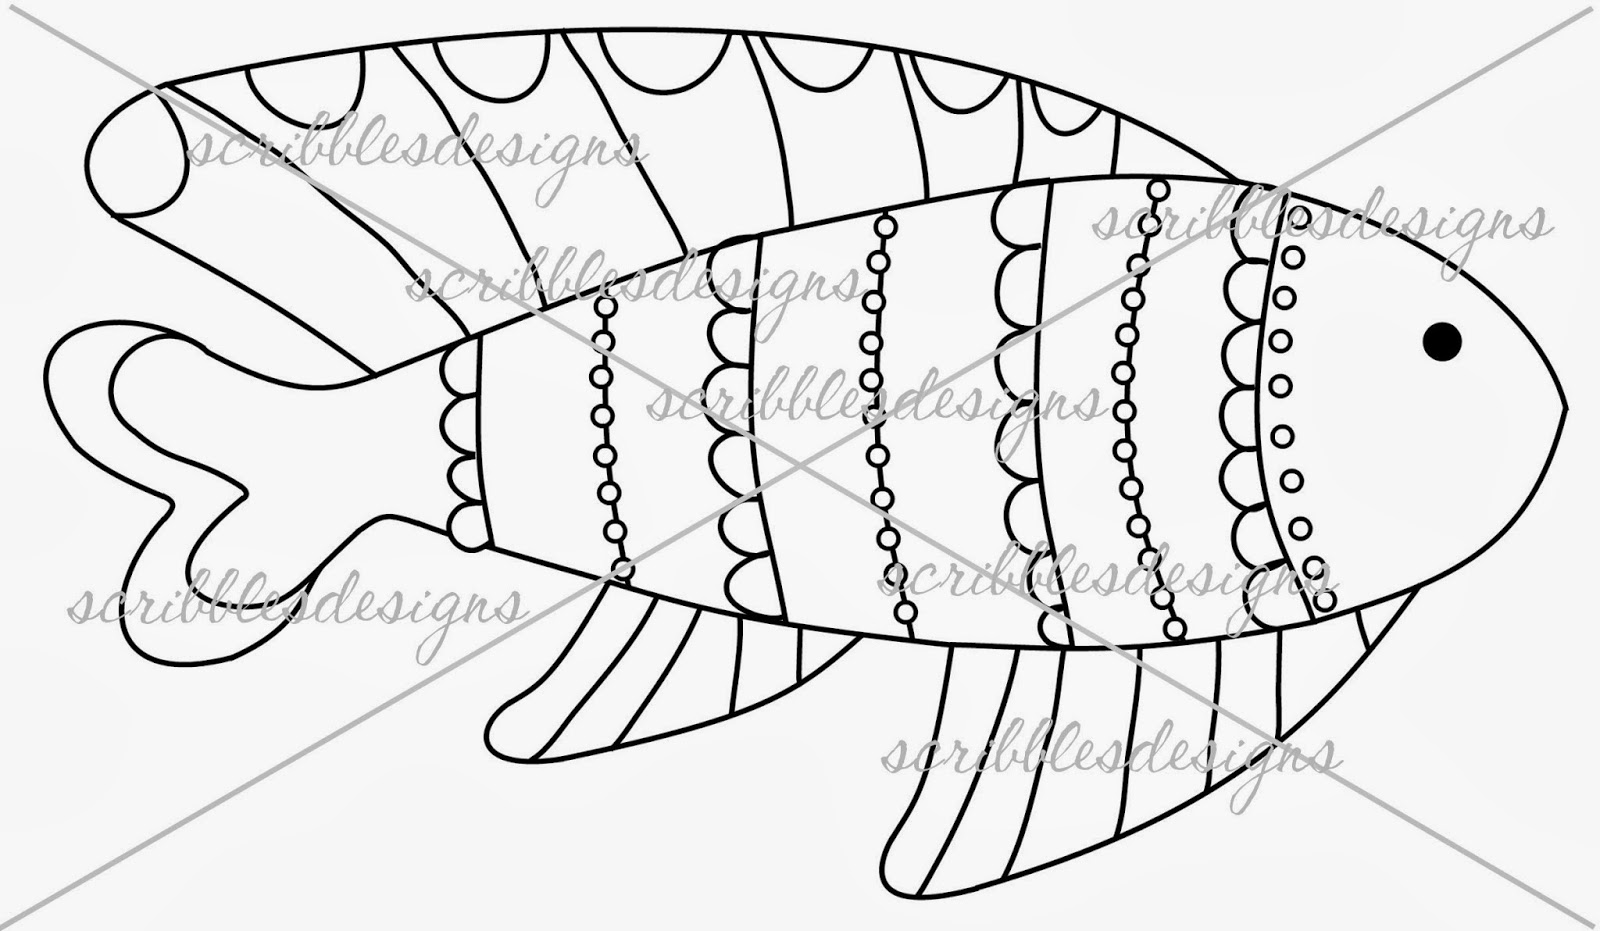 http://buyscribblesdesigns.blogspot.ca/2013/08/317-tropical-fish-6-200.html